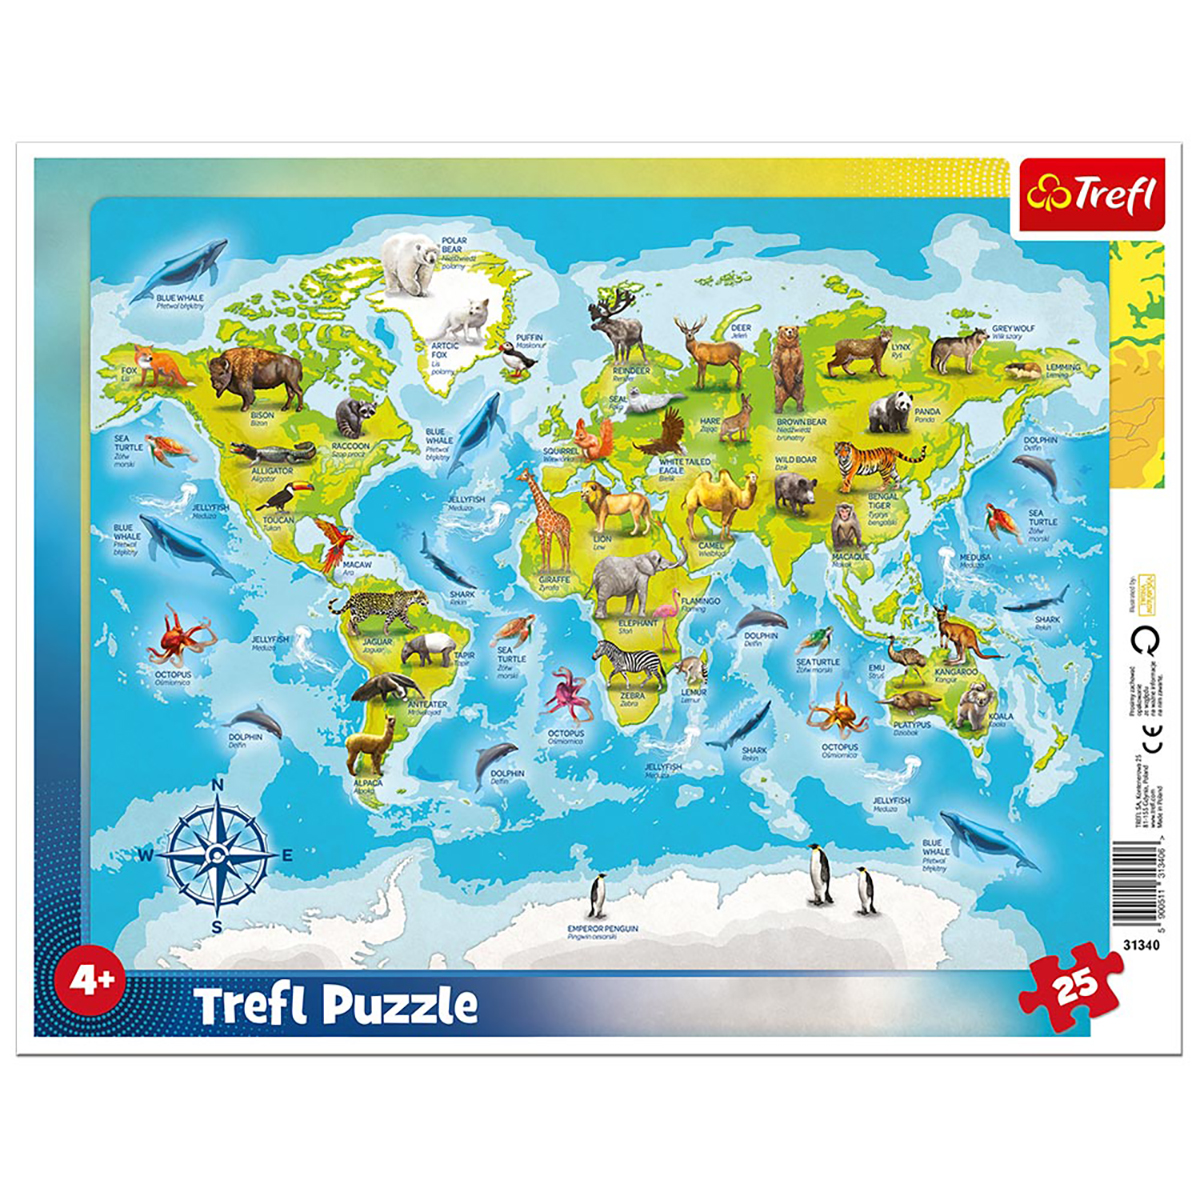 TREFL Tiermotiven Puzzle mit Weltkarte